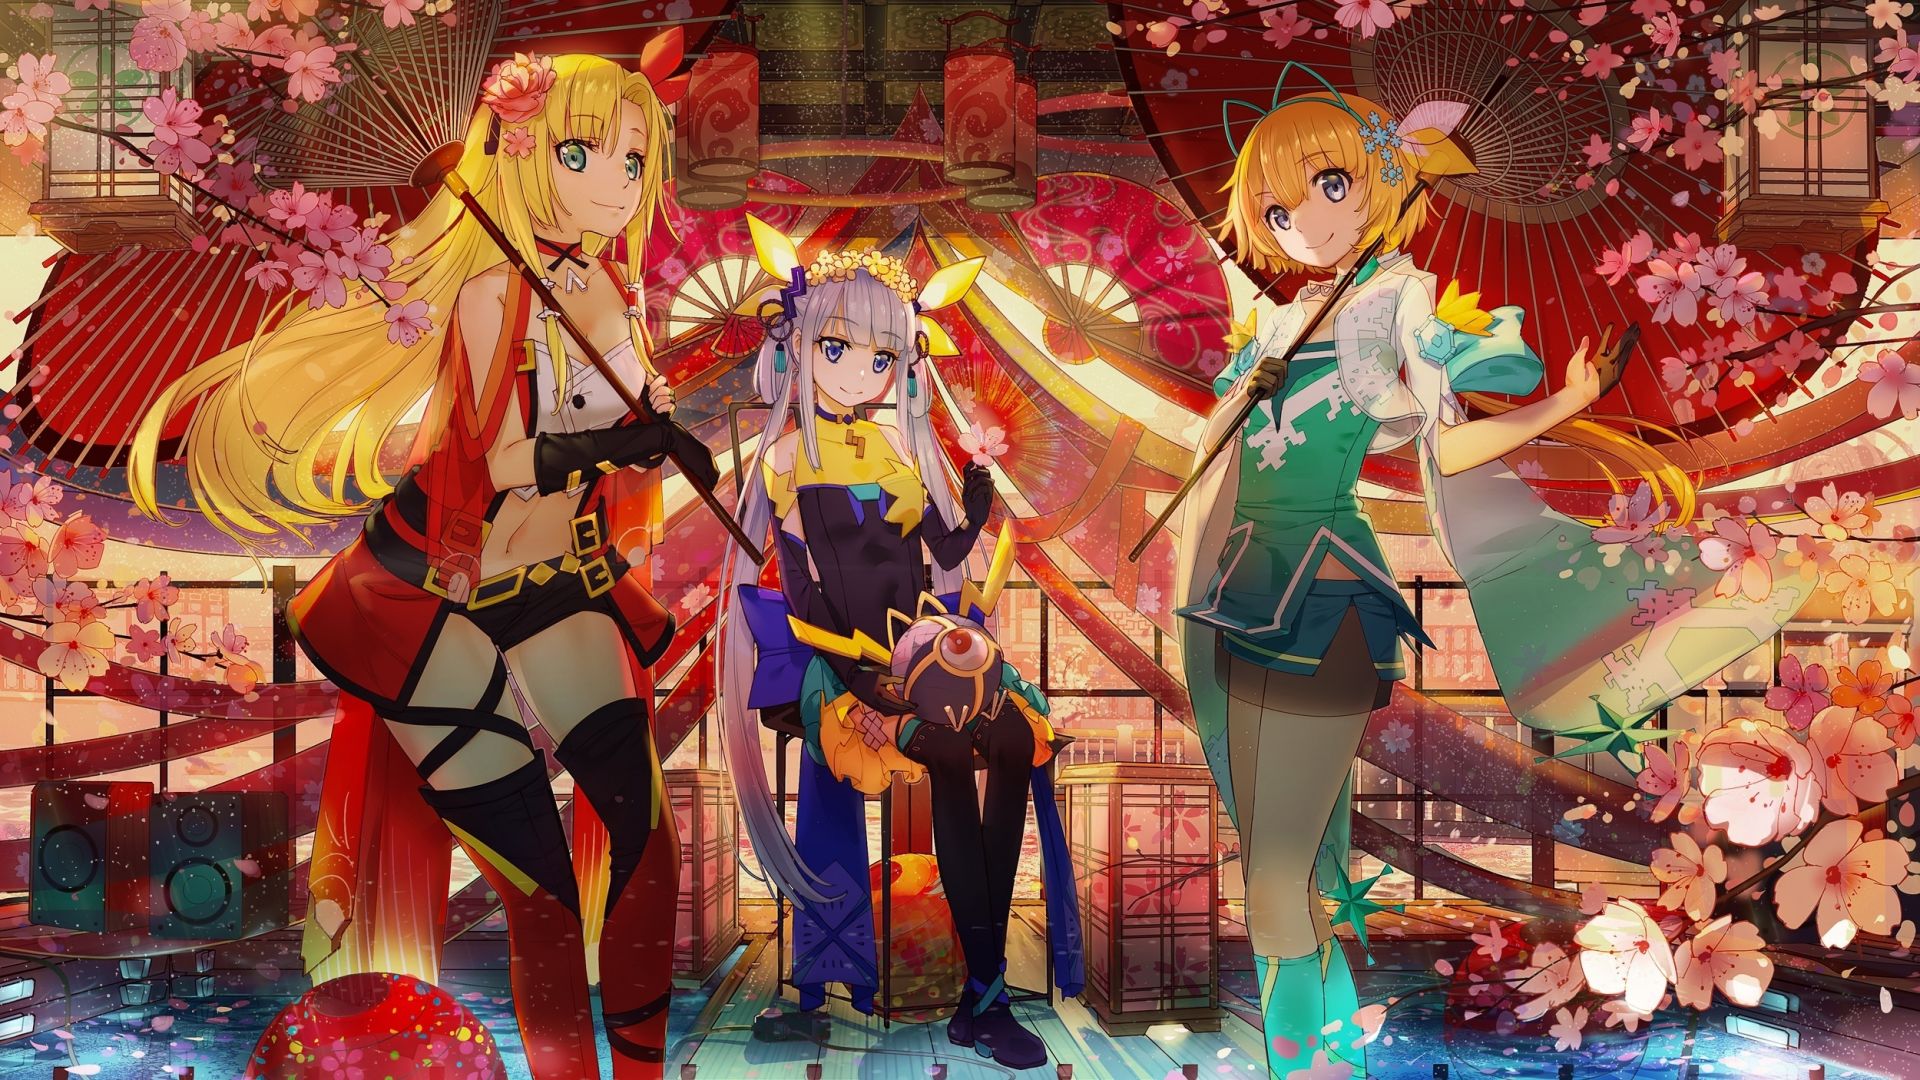 Wallpaper Blonde, anime girls, umbrella, celebrations, 2018